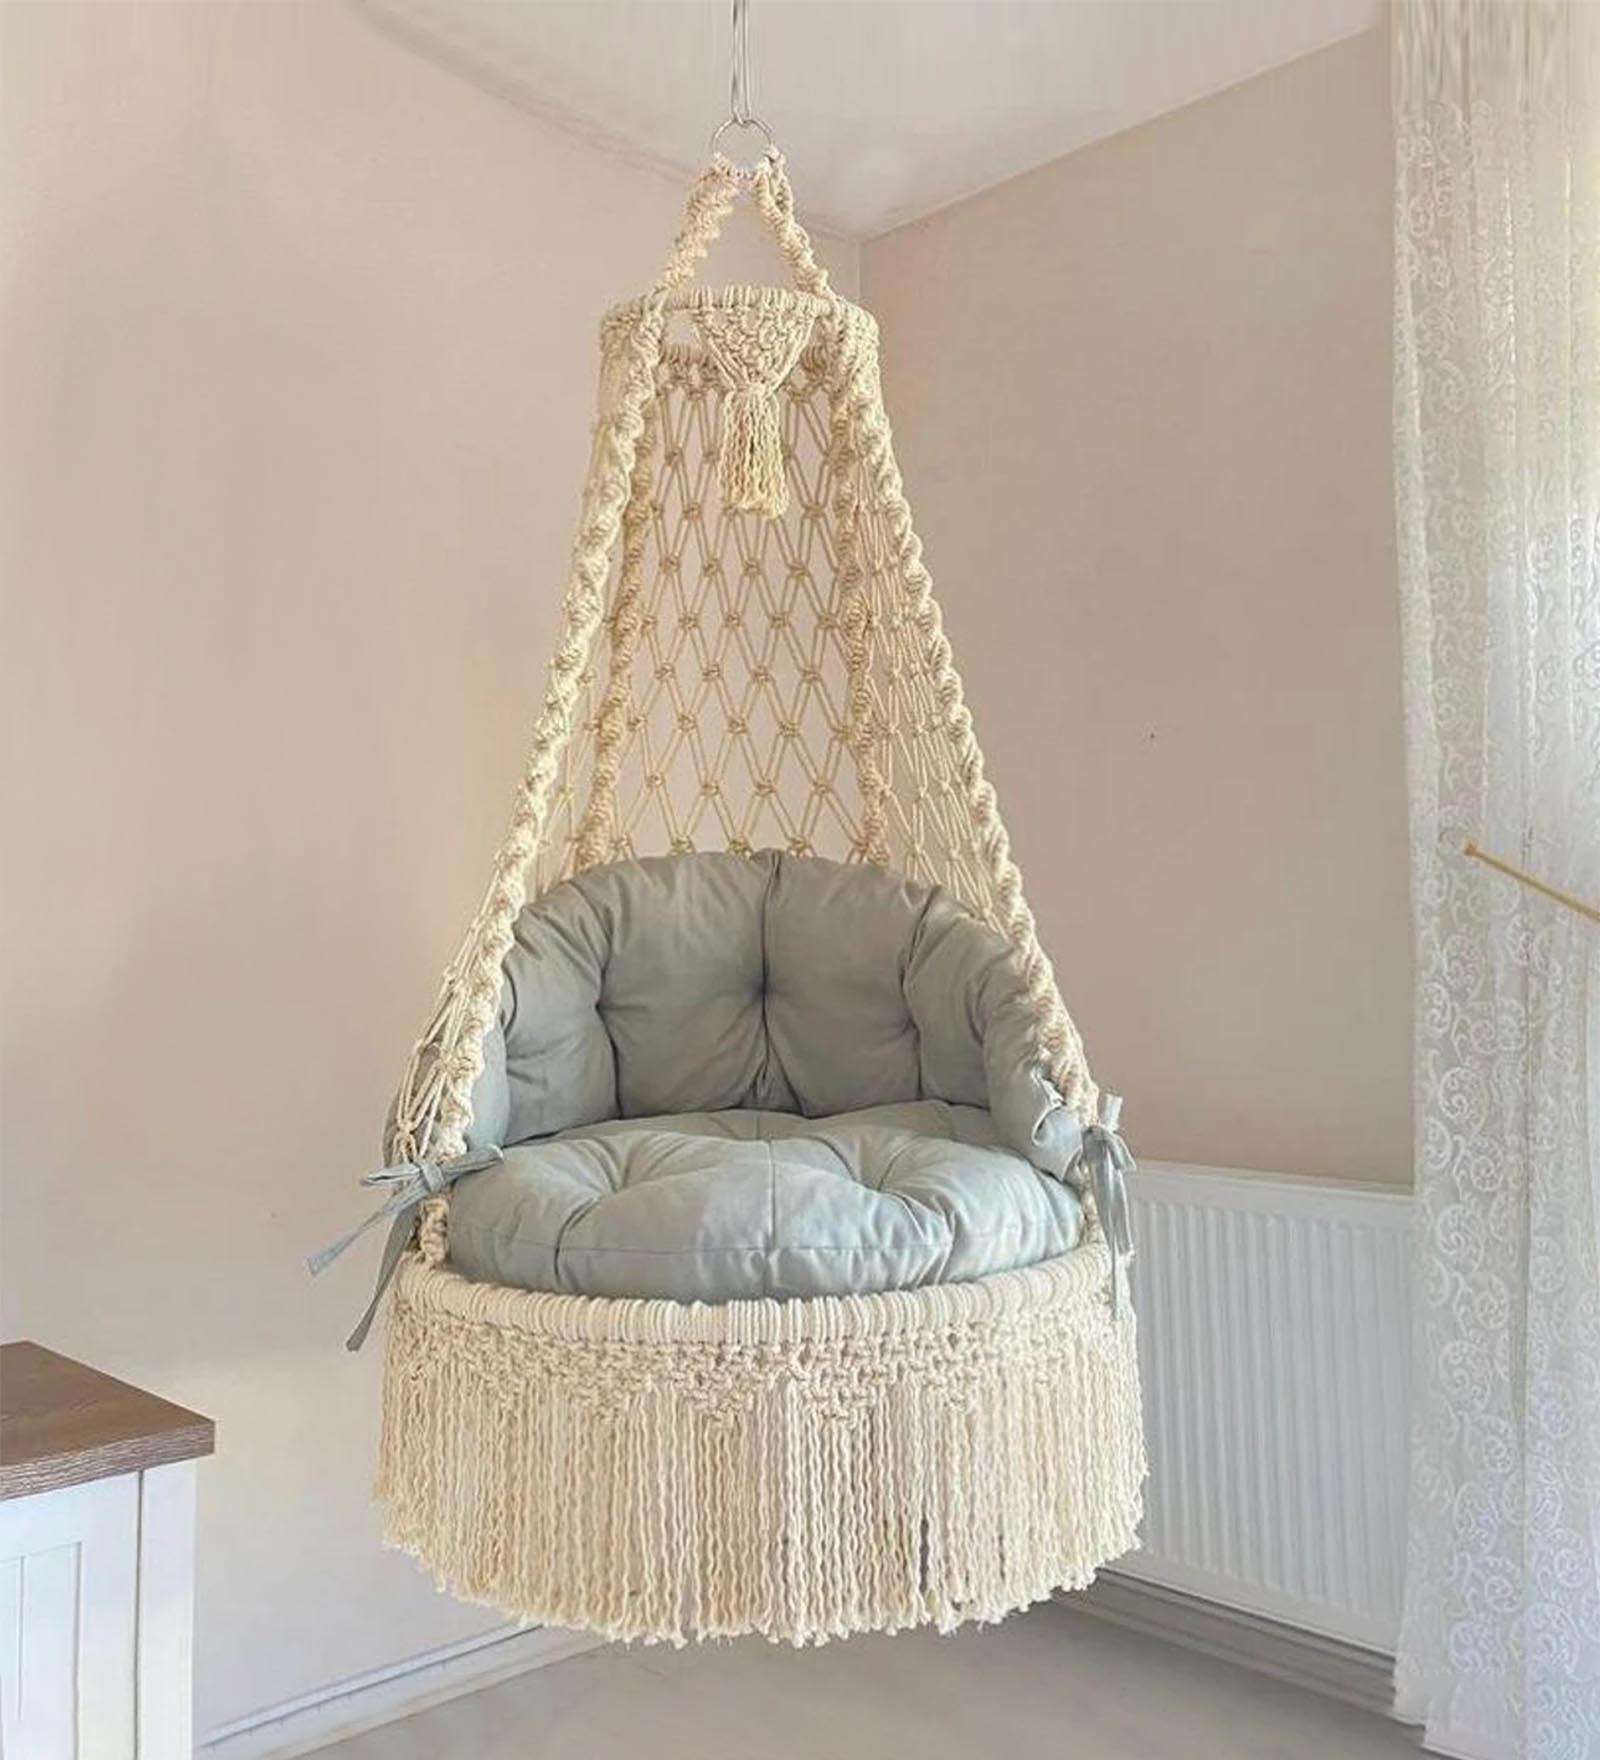 Cozy Nest Hanger Swing